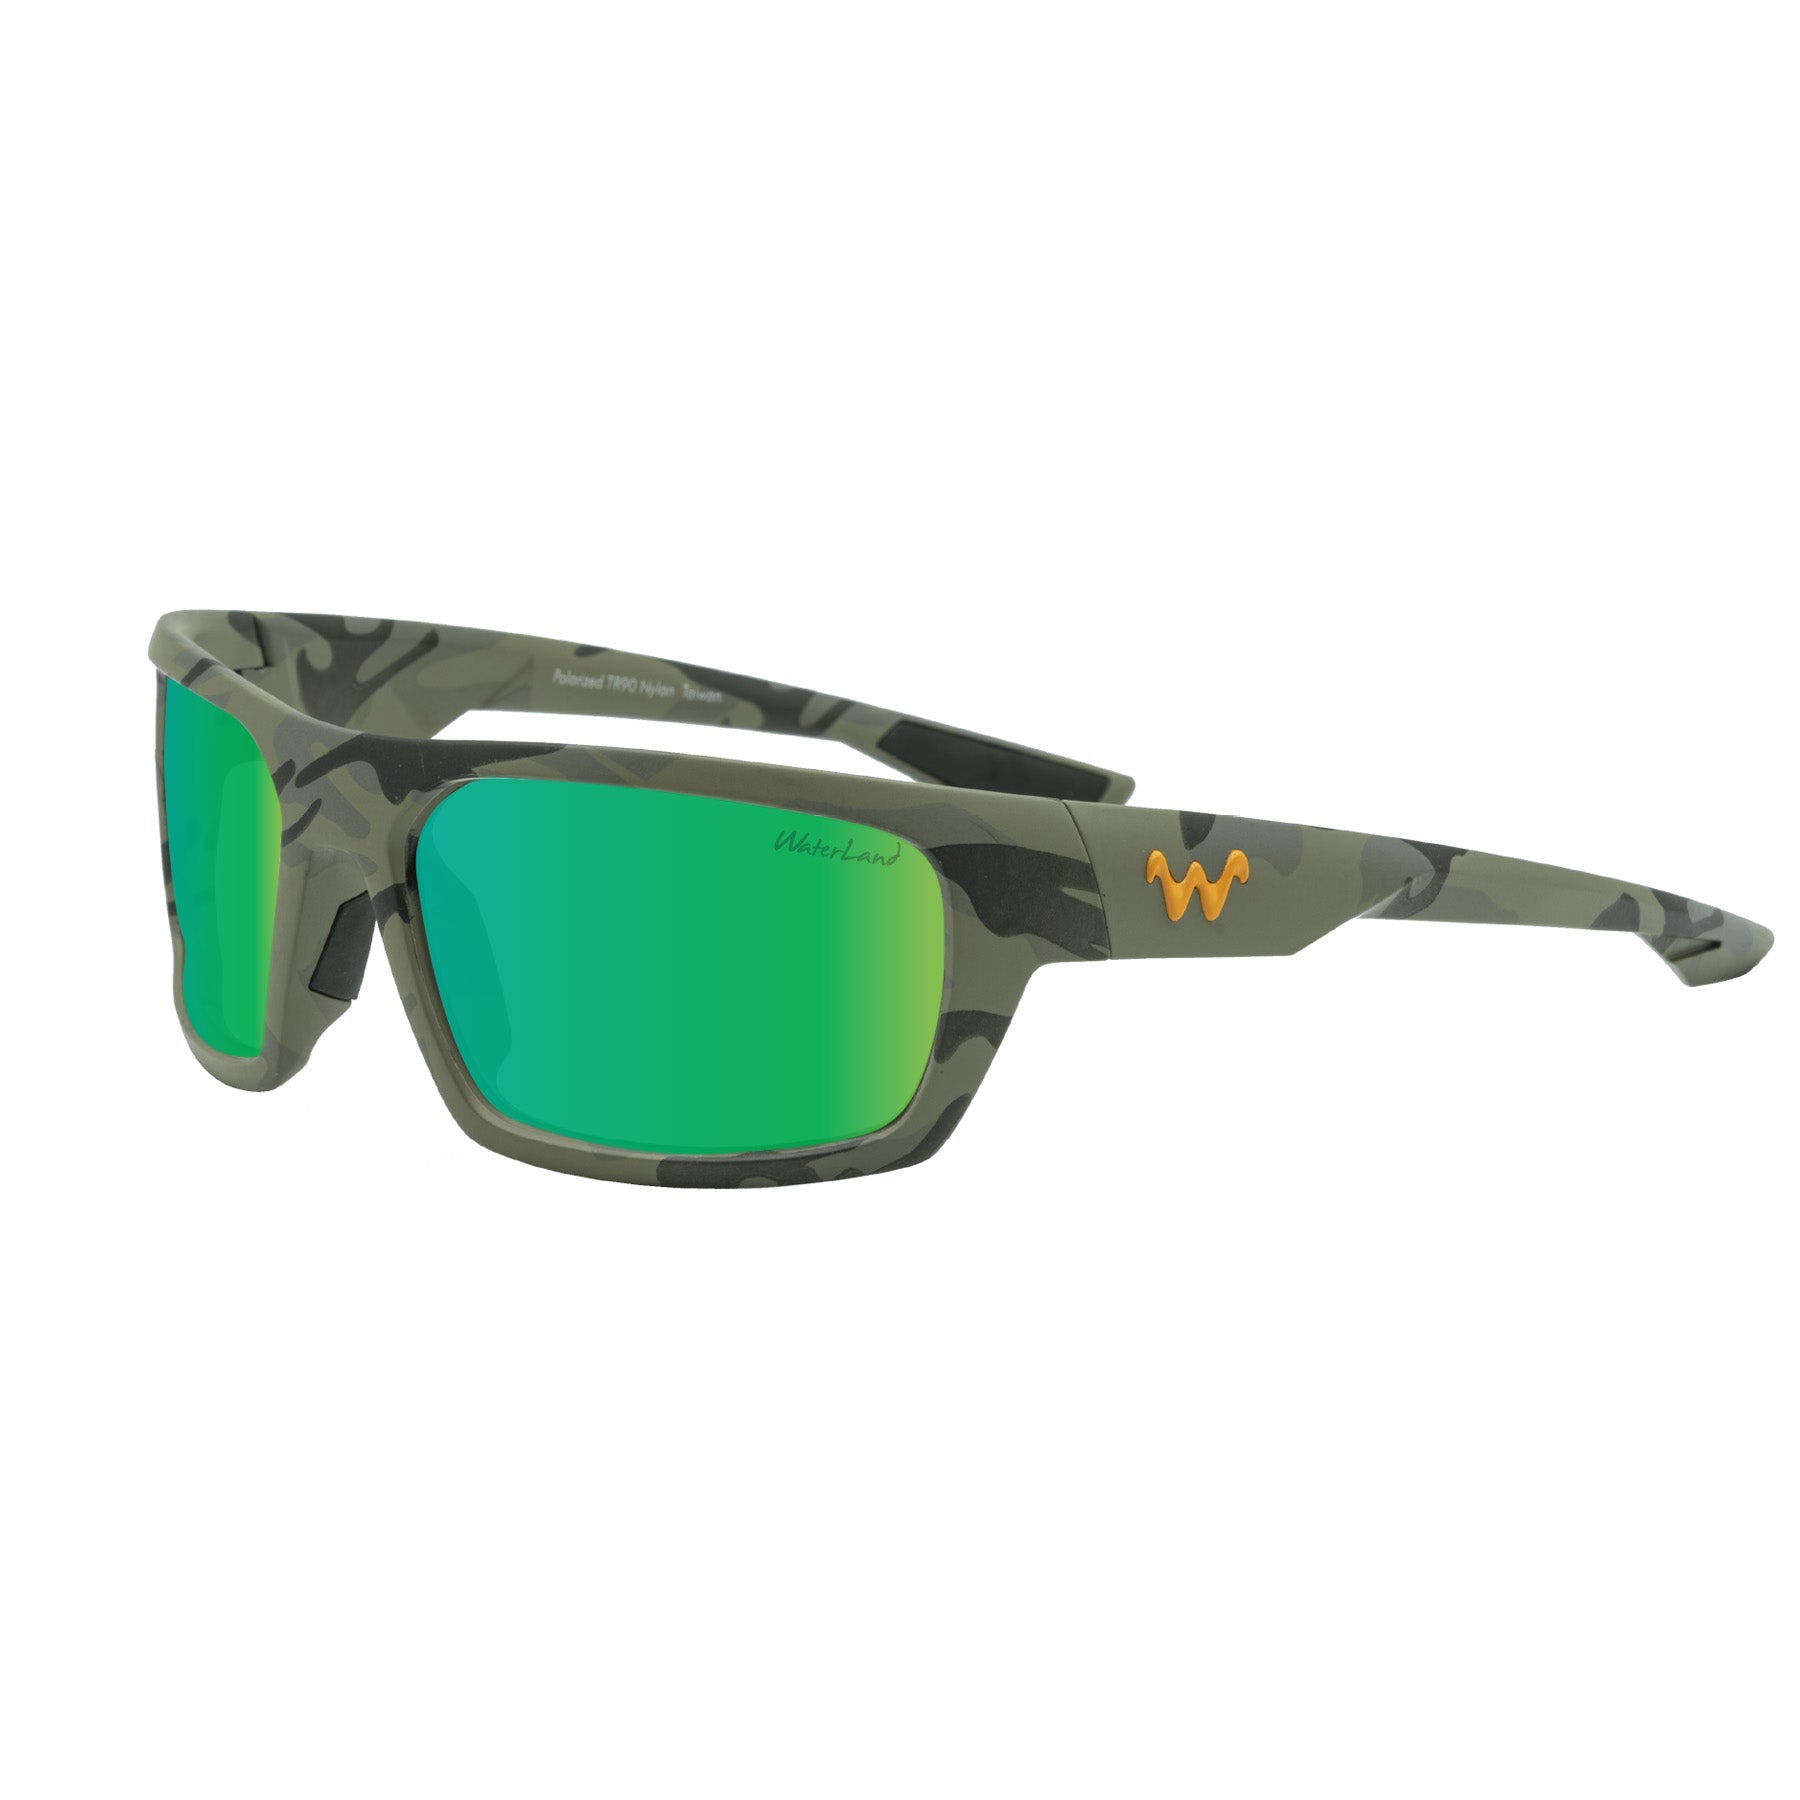 Waterland Fishing Sunglasses Milliken / Waterwood / Golden Light Glass